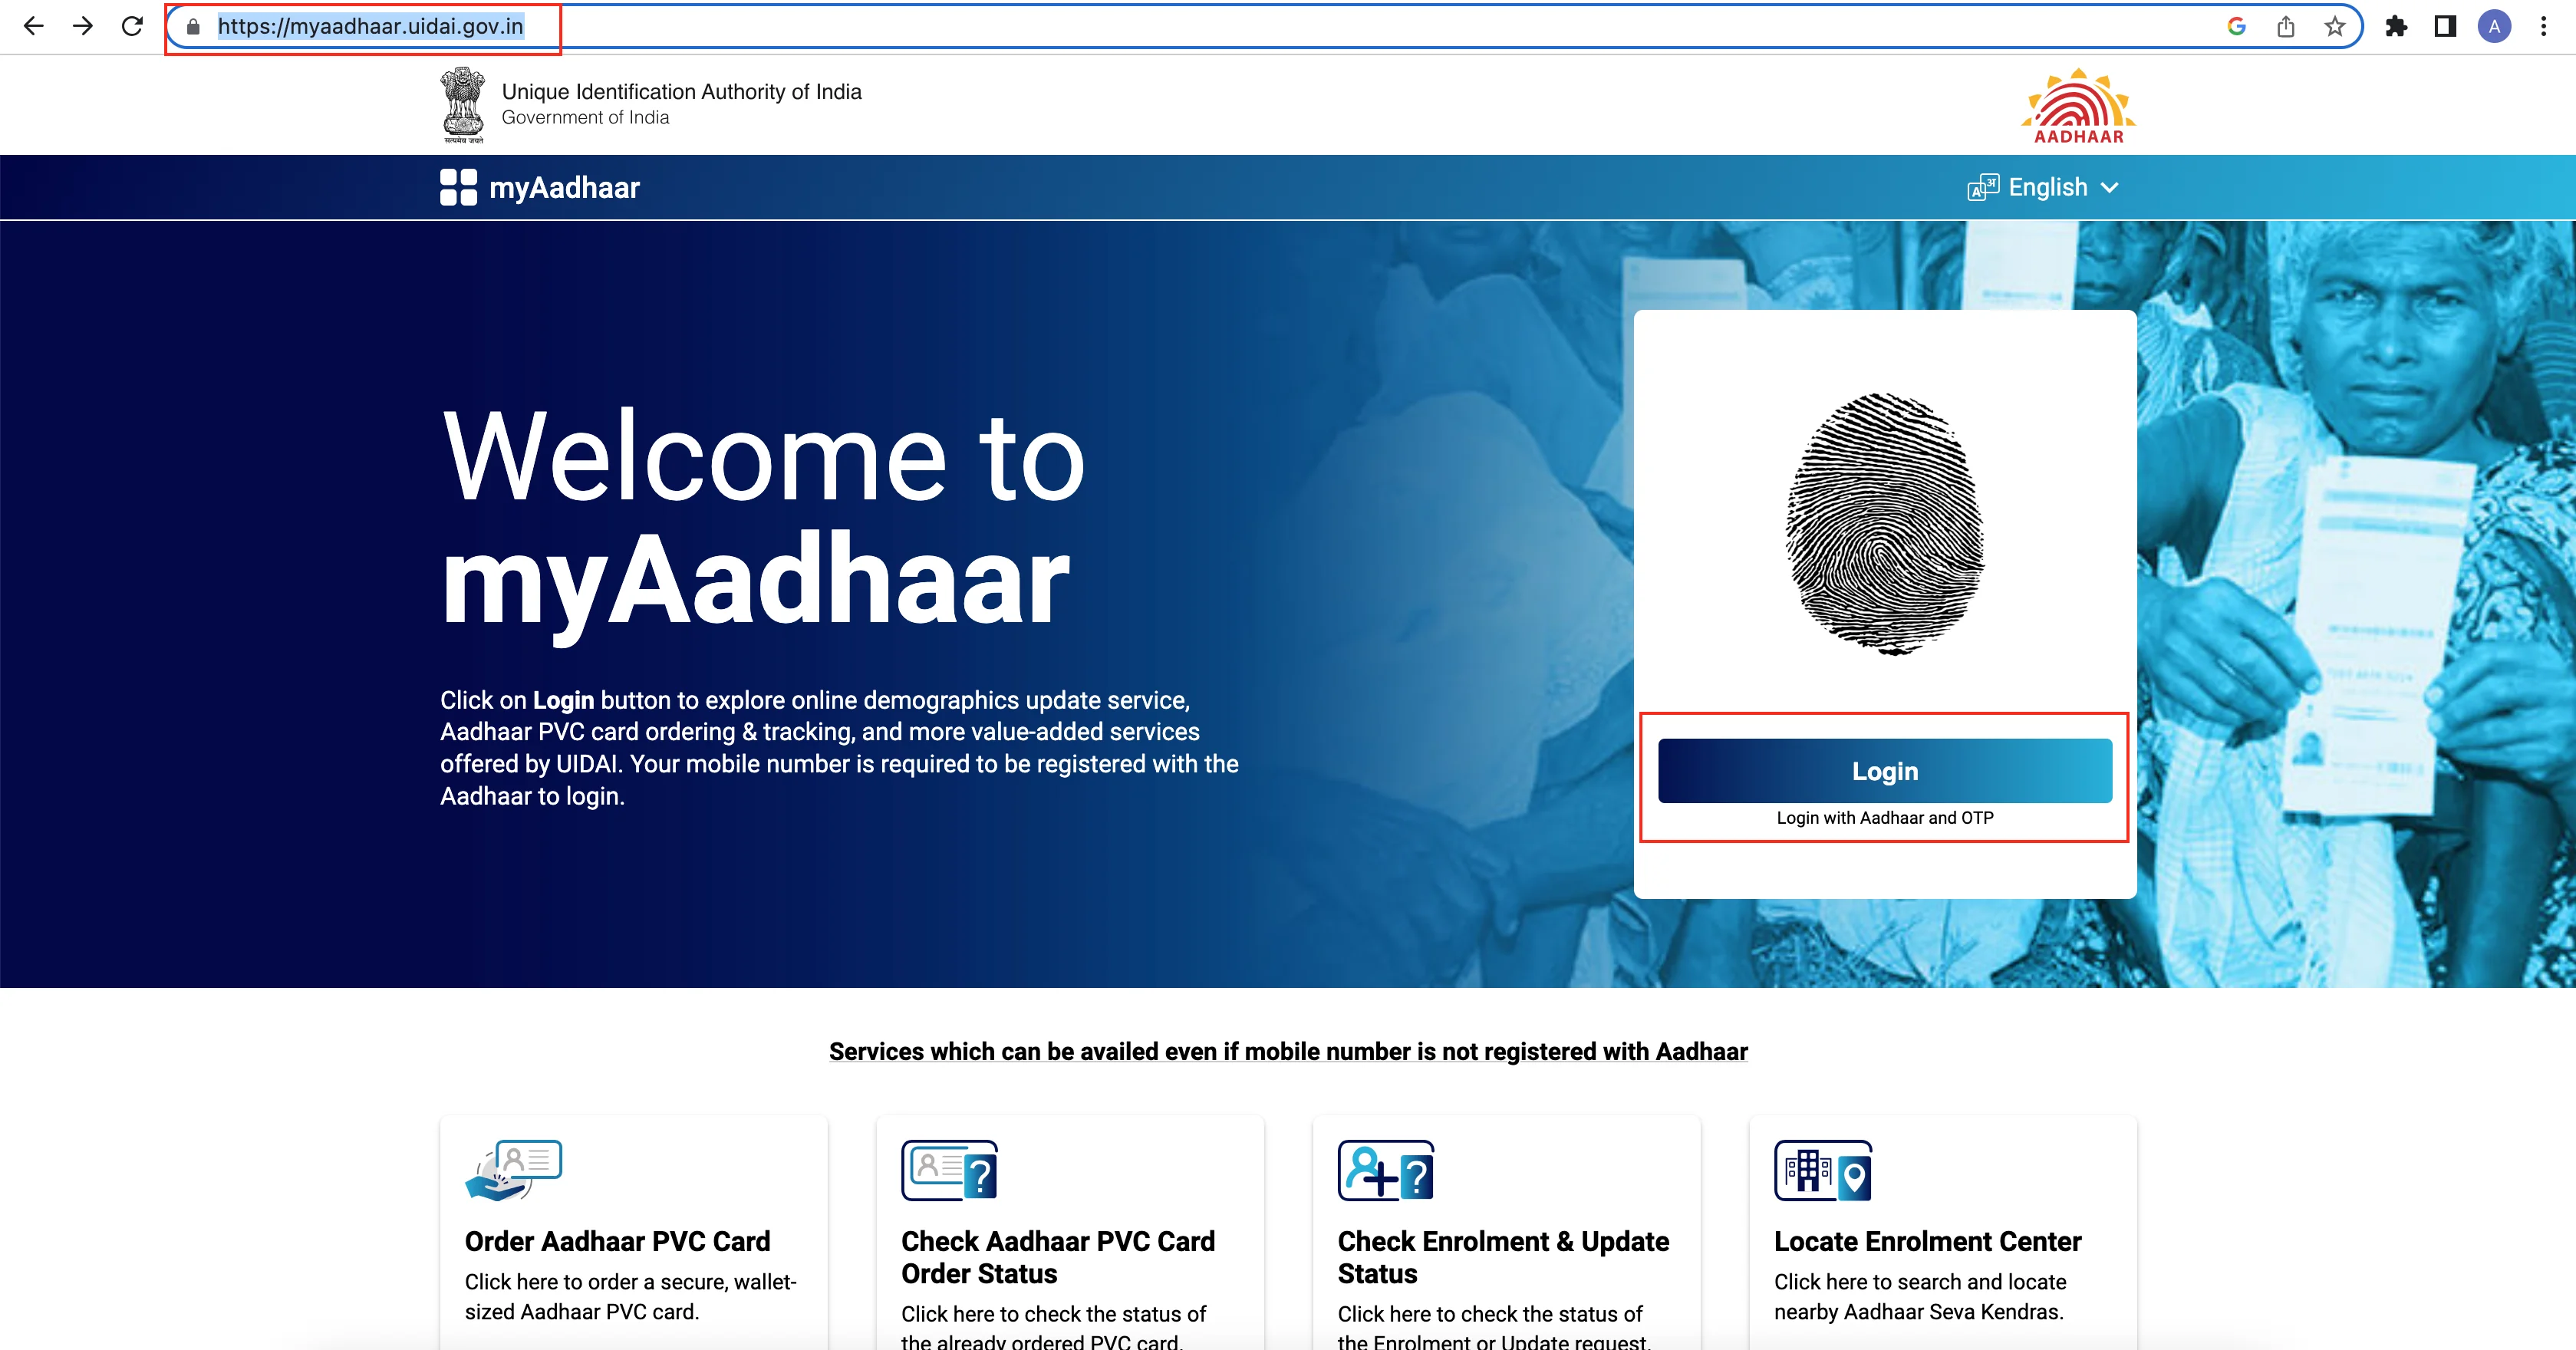 MyAadhaar Portal login - Whatnewtrends